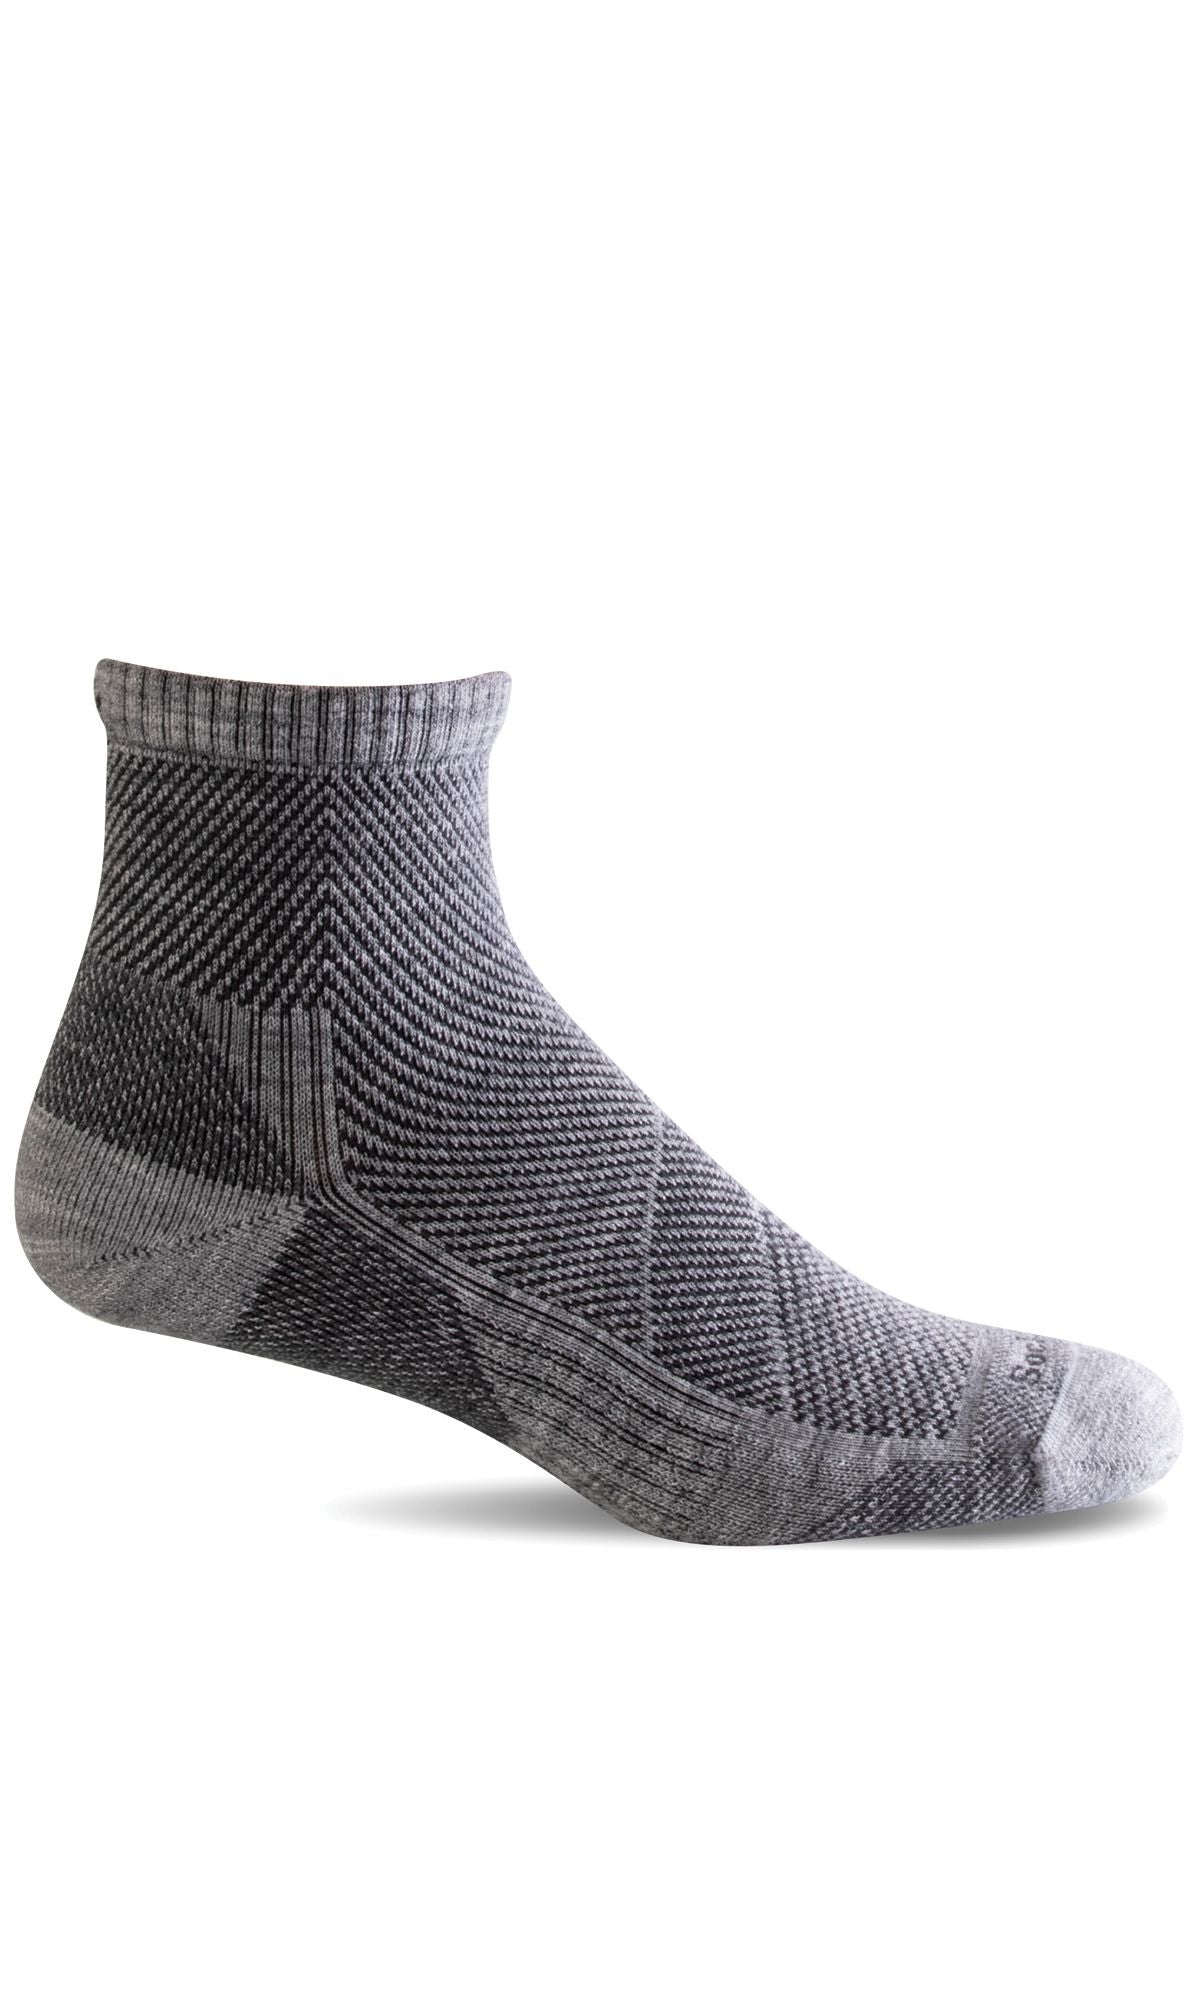 Sockwell Elevate Quarter Moderate Compression Socks (Men's)